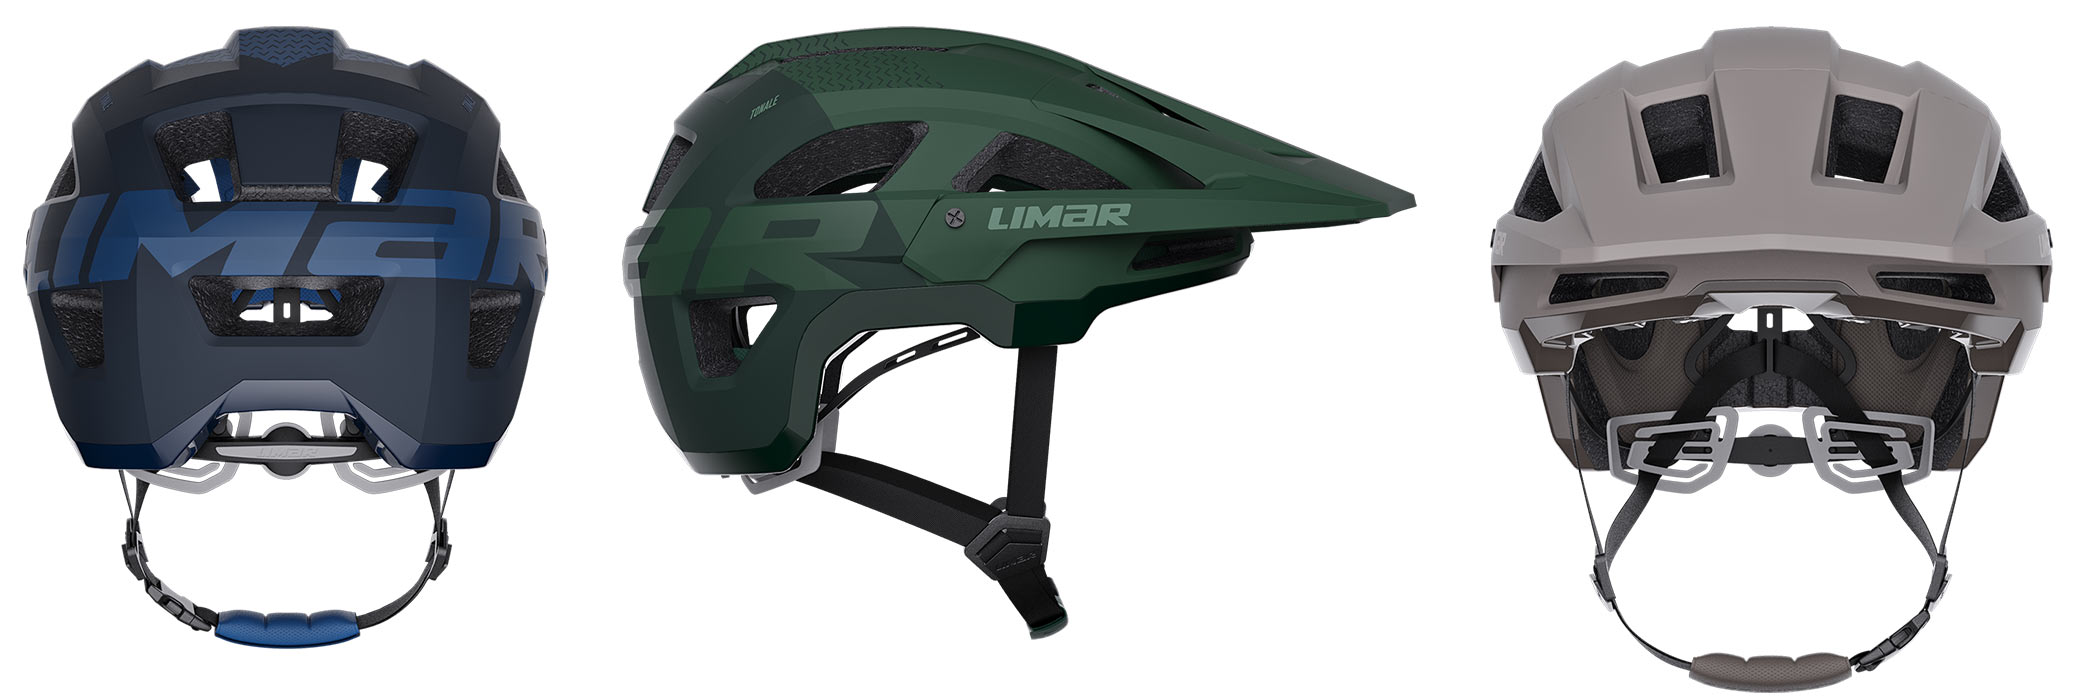 Limar Tonale affordable all-mountain bike helmet, blue green & gray